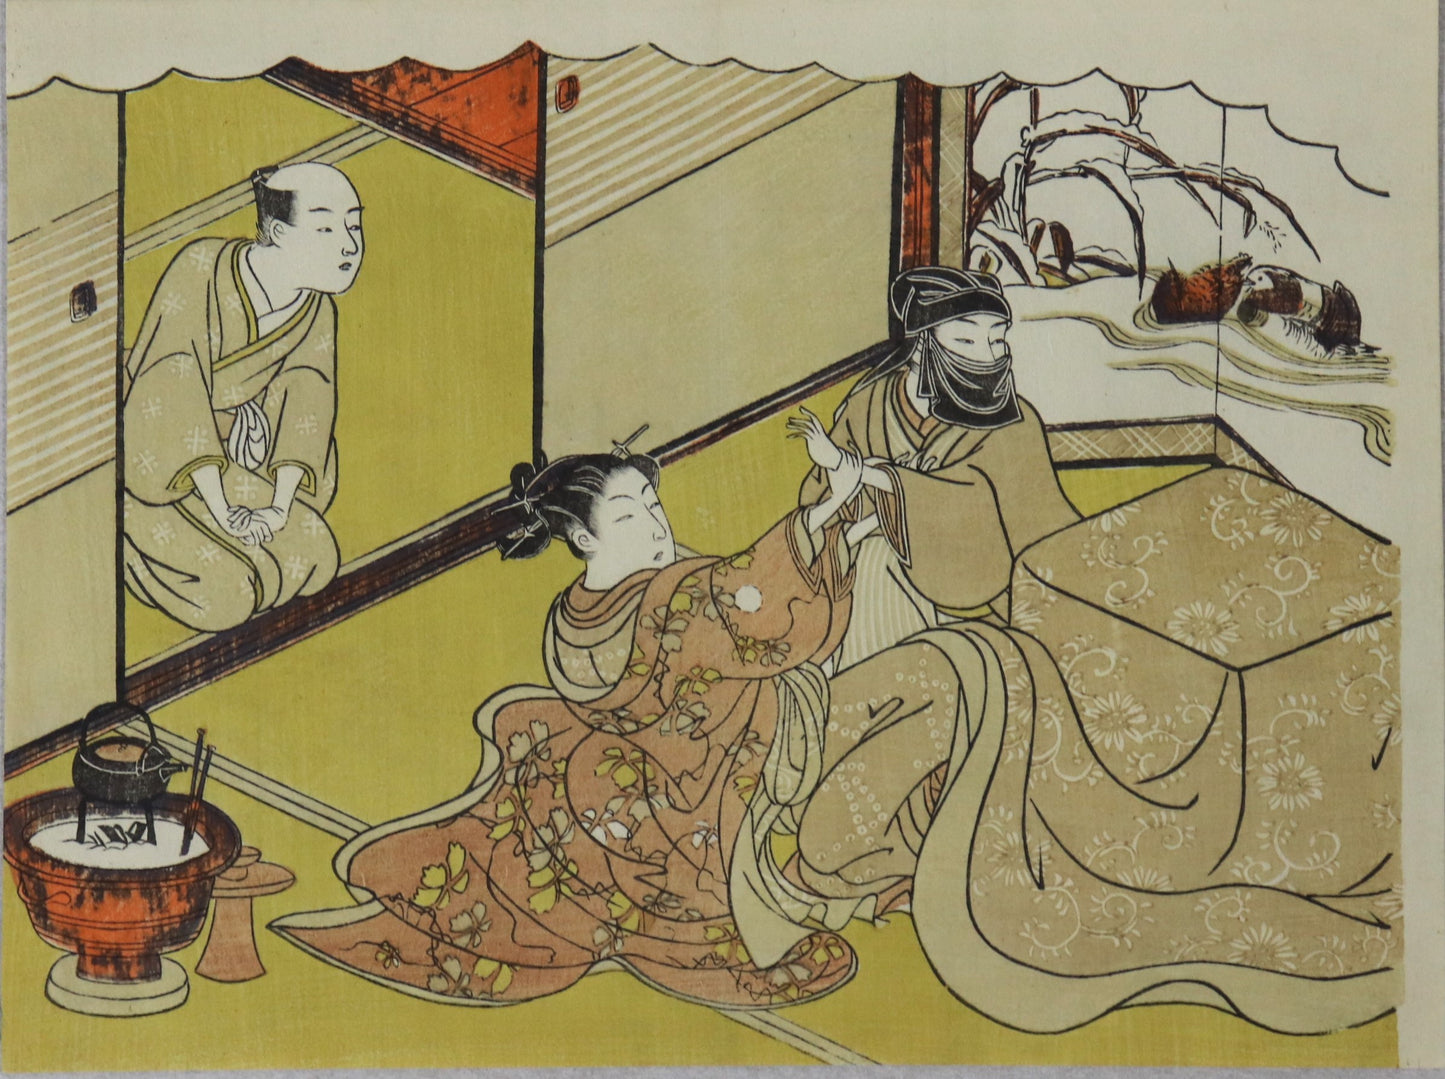 Woman  under Kotatsu and Masked man from the series "Enshoku Koi no Urakata " by Harunobu / Femme sous Kotatsu et homme masqué de la série "Enshoku Koi no Urakata " par Harunobu (1766-1770)